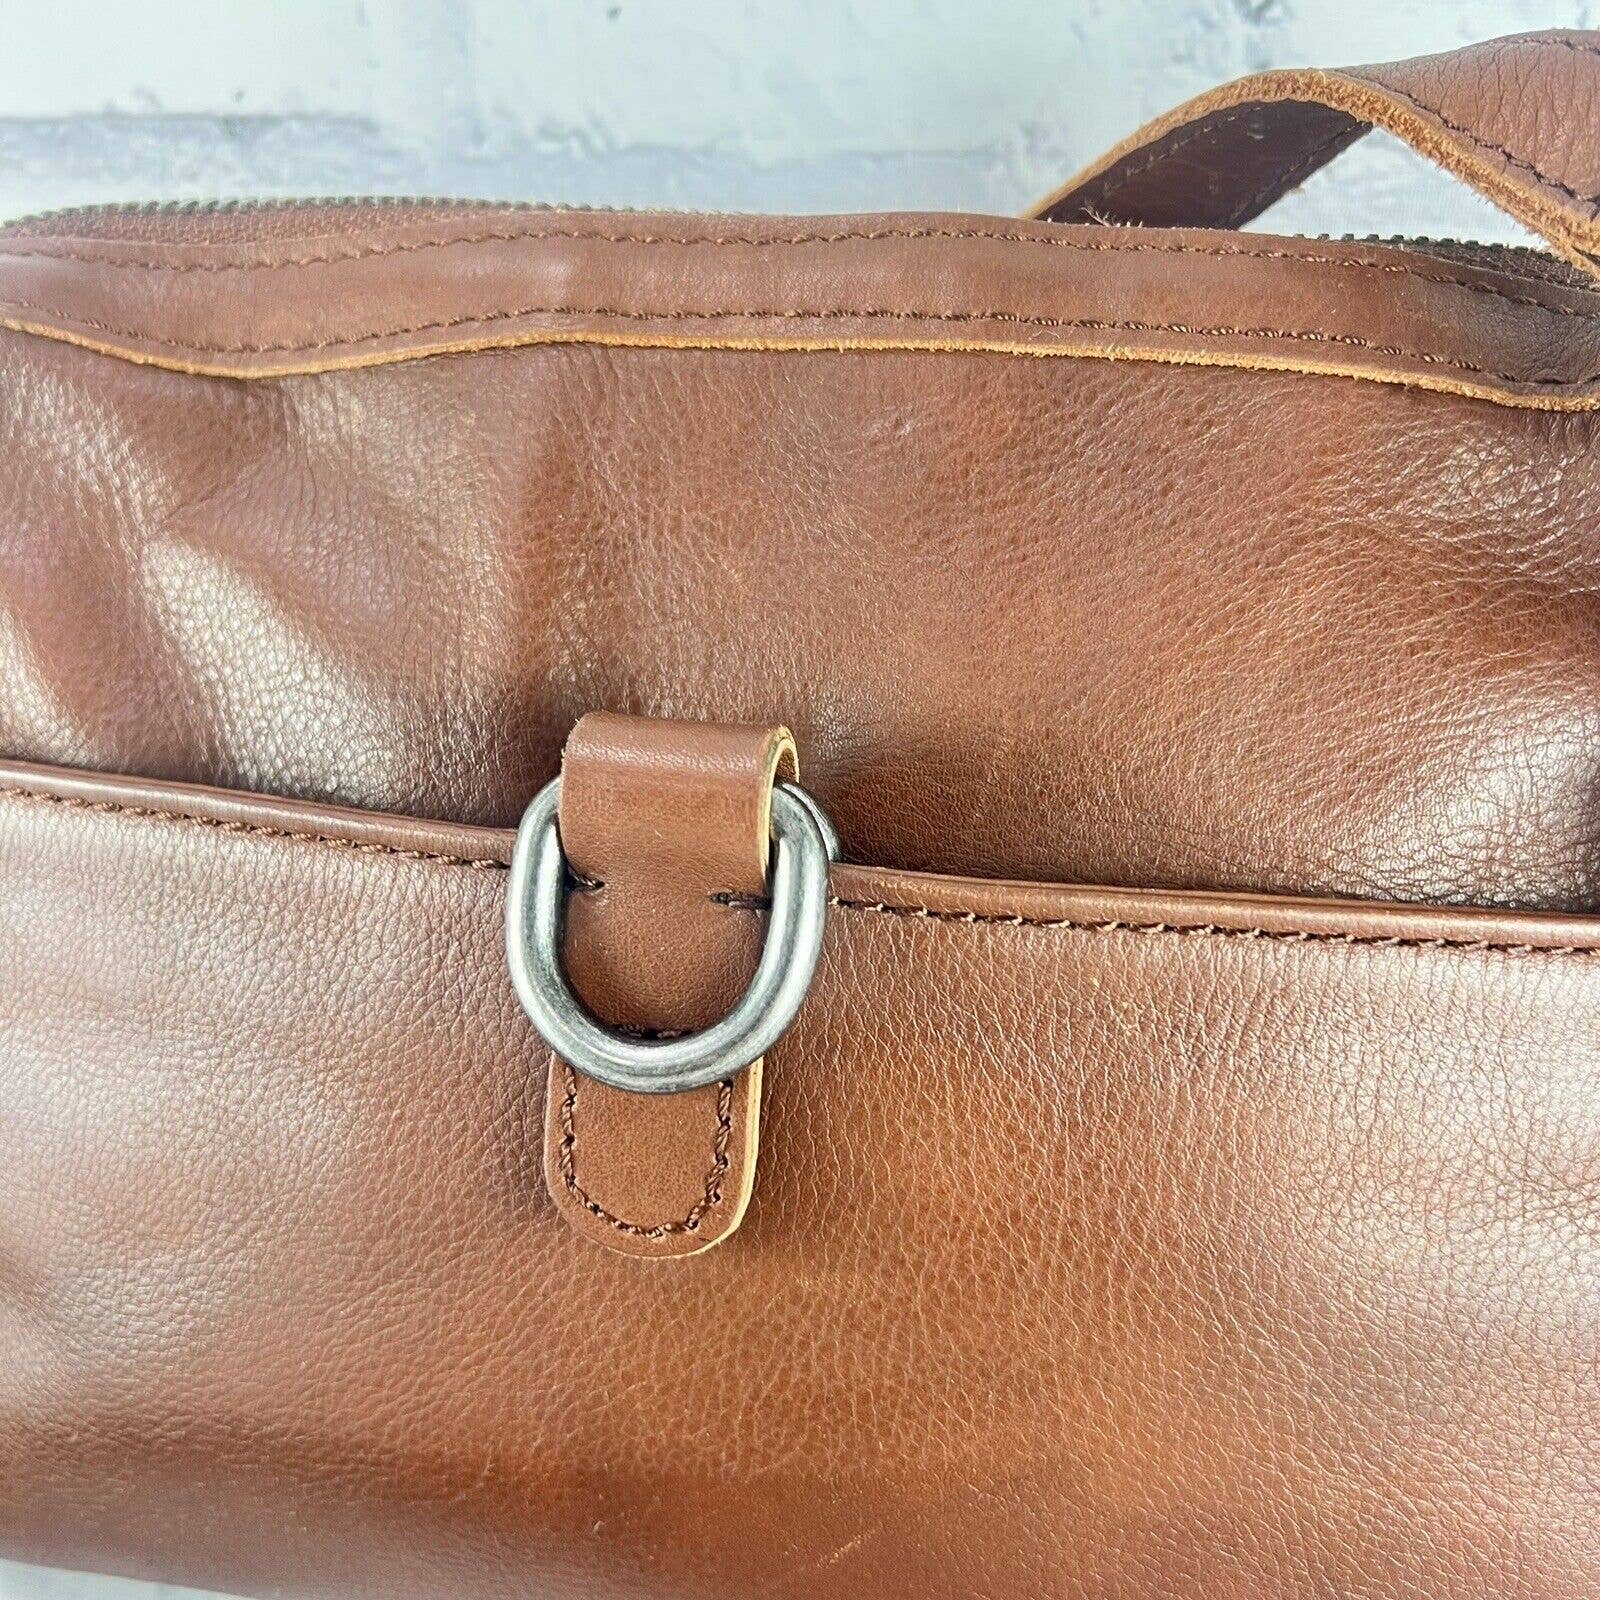 Lucky Brand Leather Crossbody Purse Shoulder Bag Brown Boho Buckle Medium Size